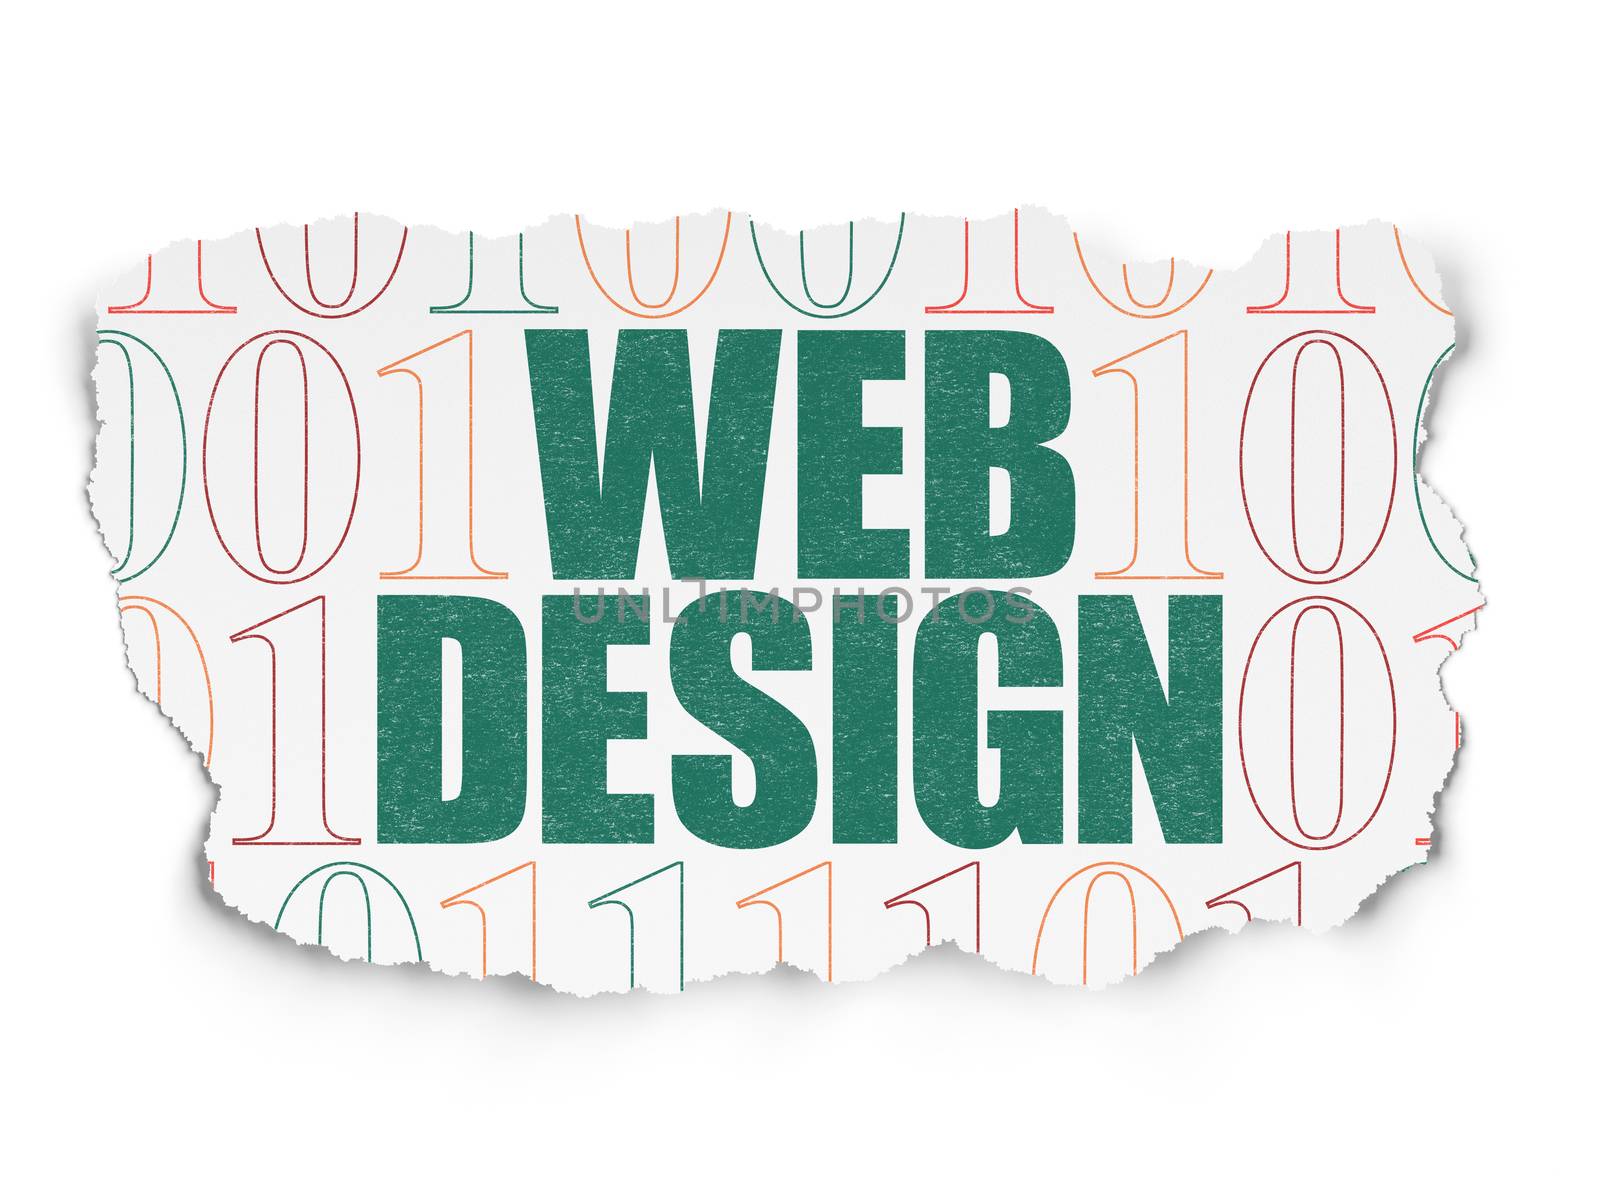 Web design concept: Web Design on Torn Paper background by maxkabakov